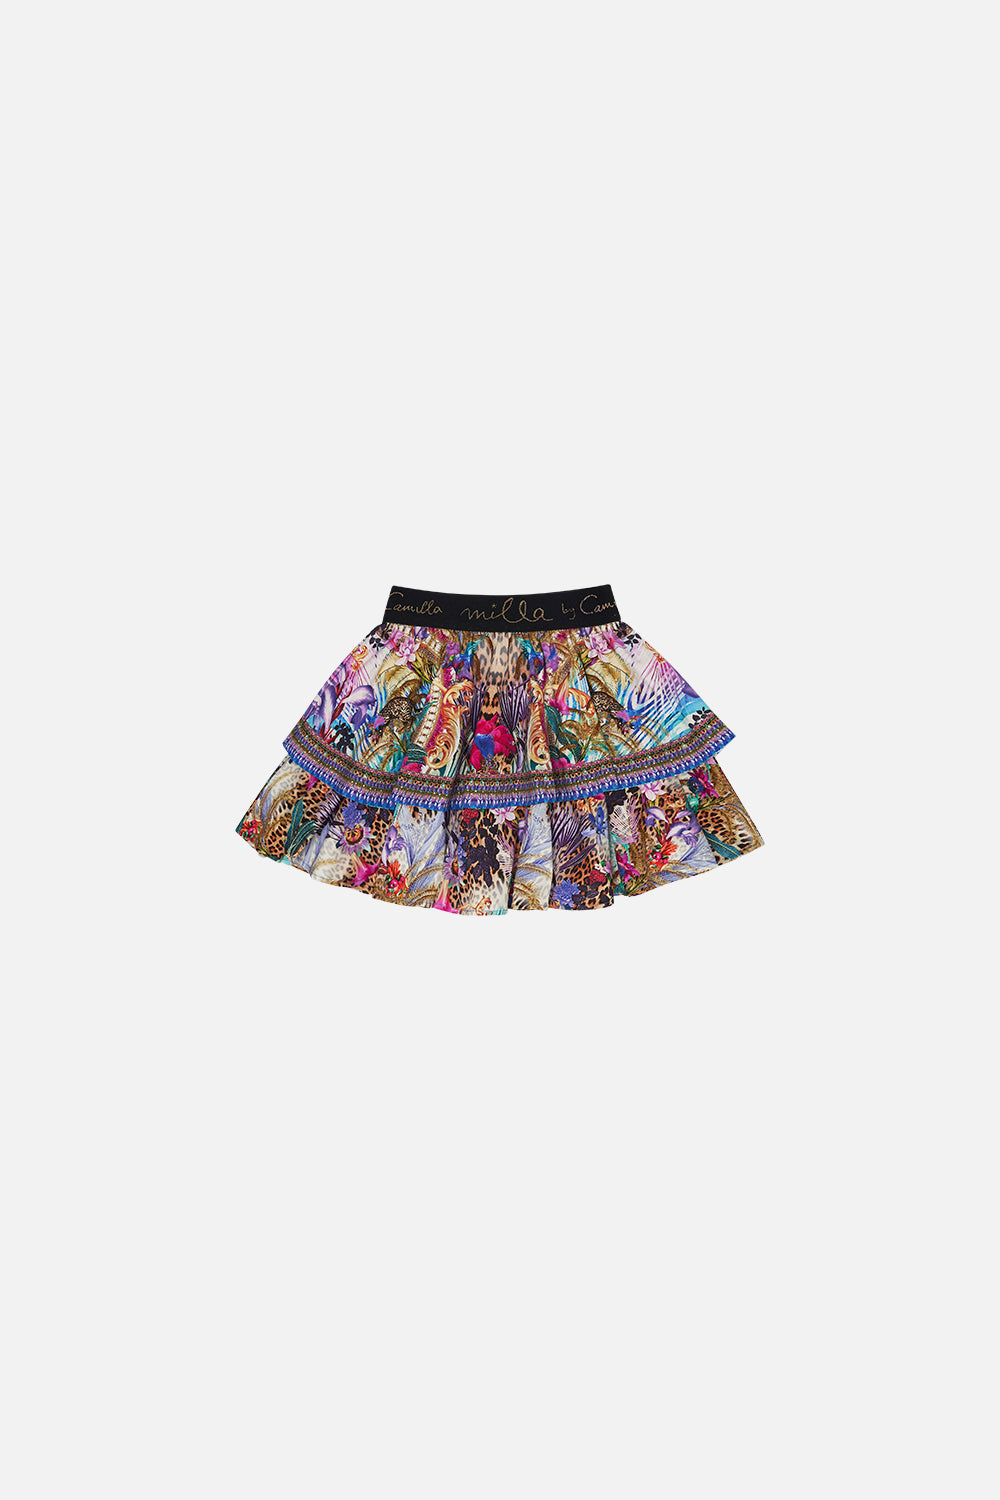 Kids Frill Hem Skirt With Jacquard Elastic Waistband 12-14 Merry Go Round print by CAMILLA